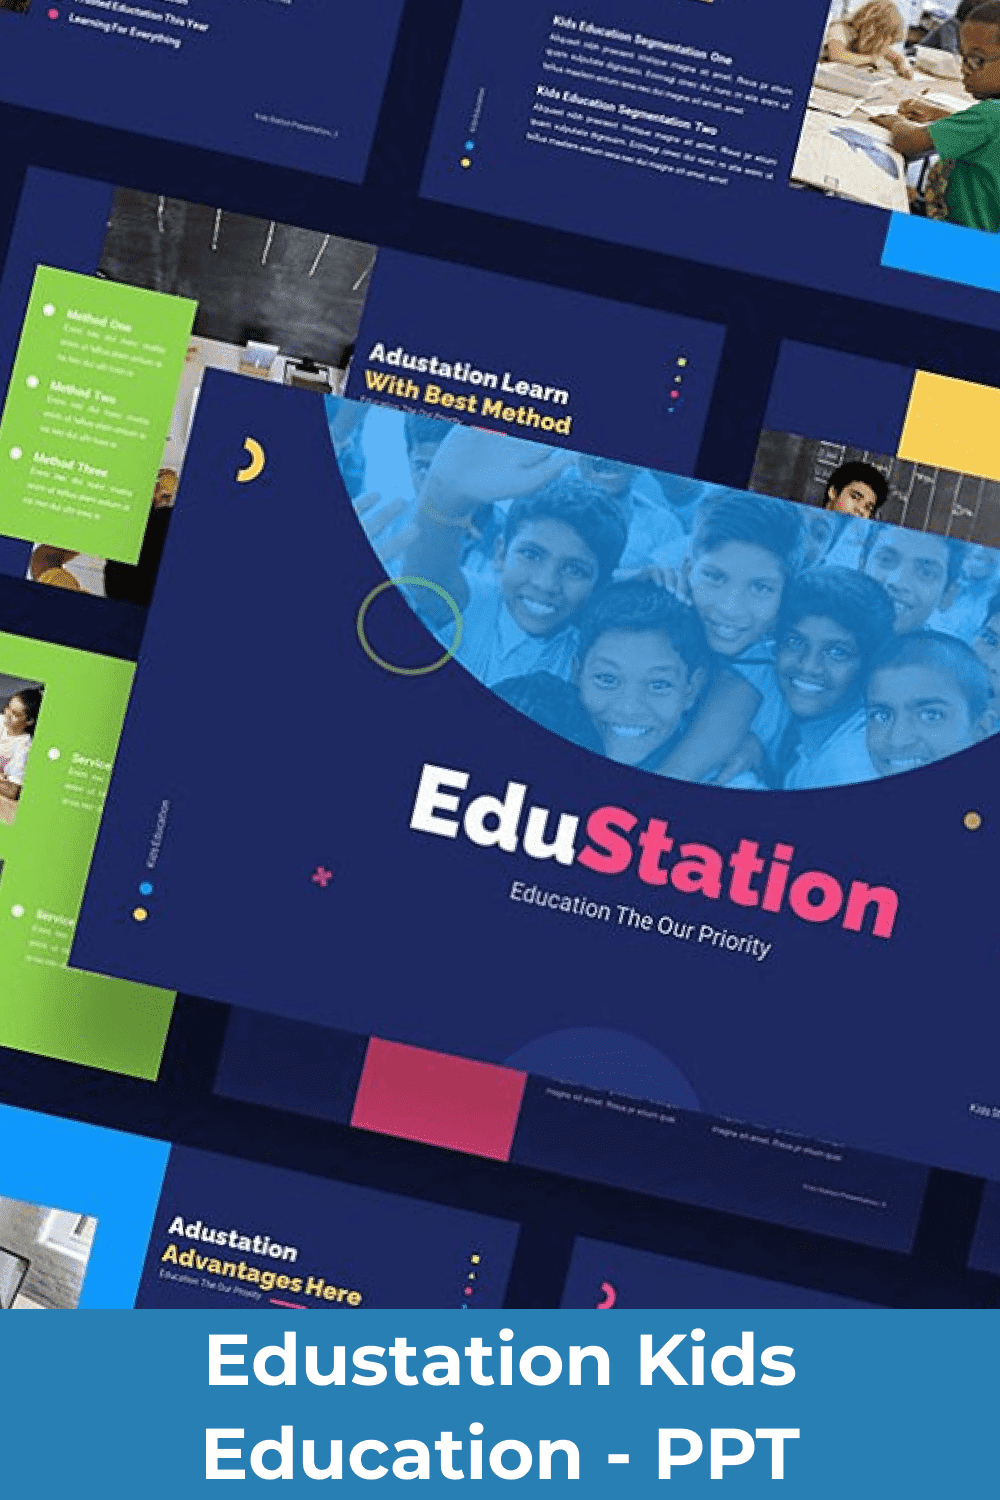 Edustation Kids Education - PPT - "Adustation Learn With Best Method".